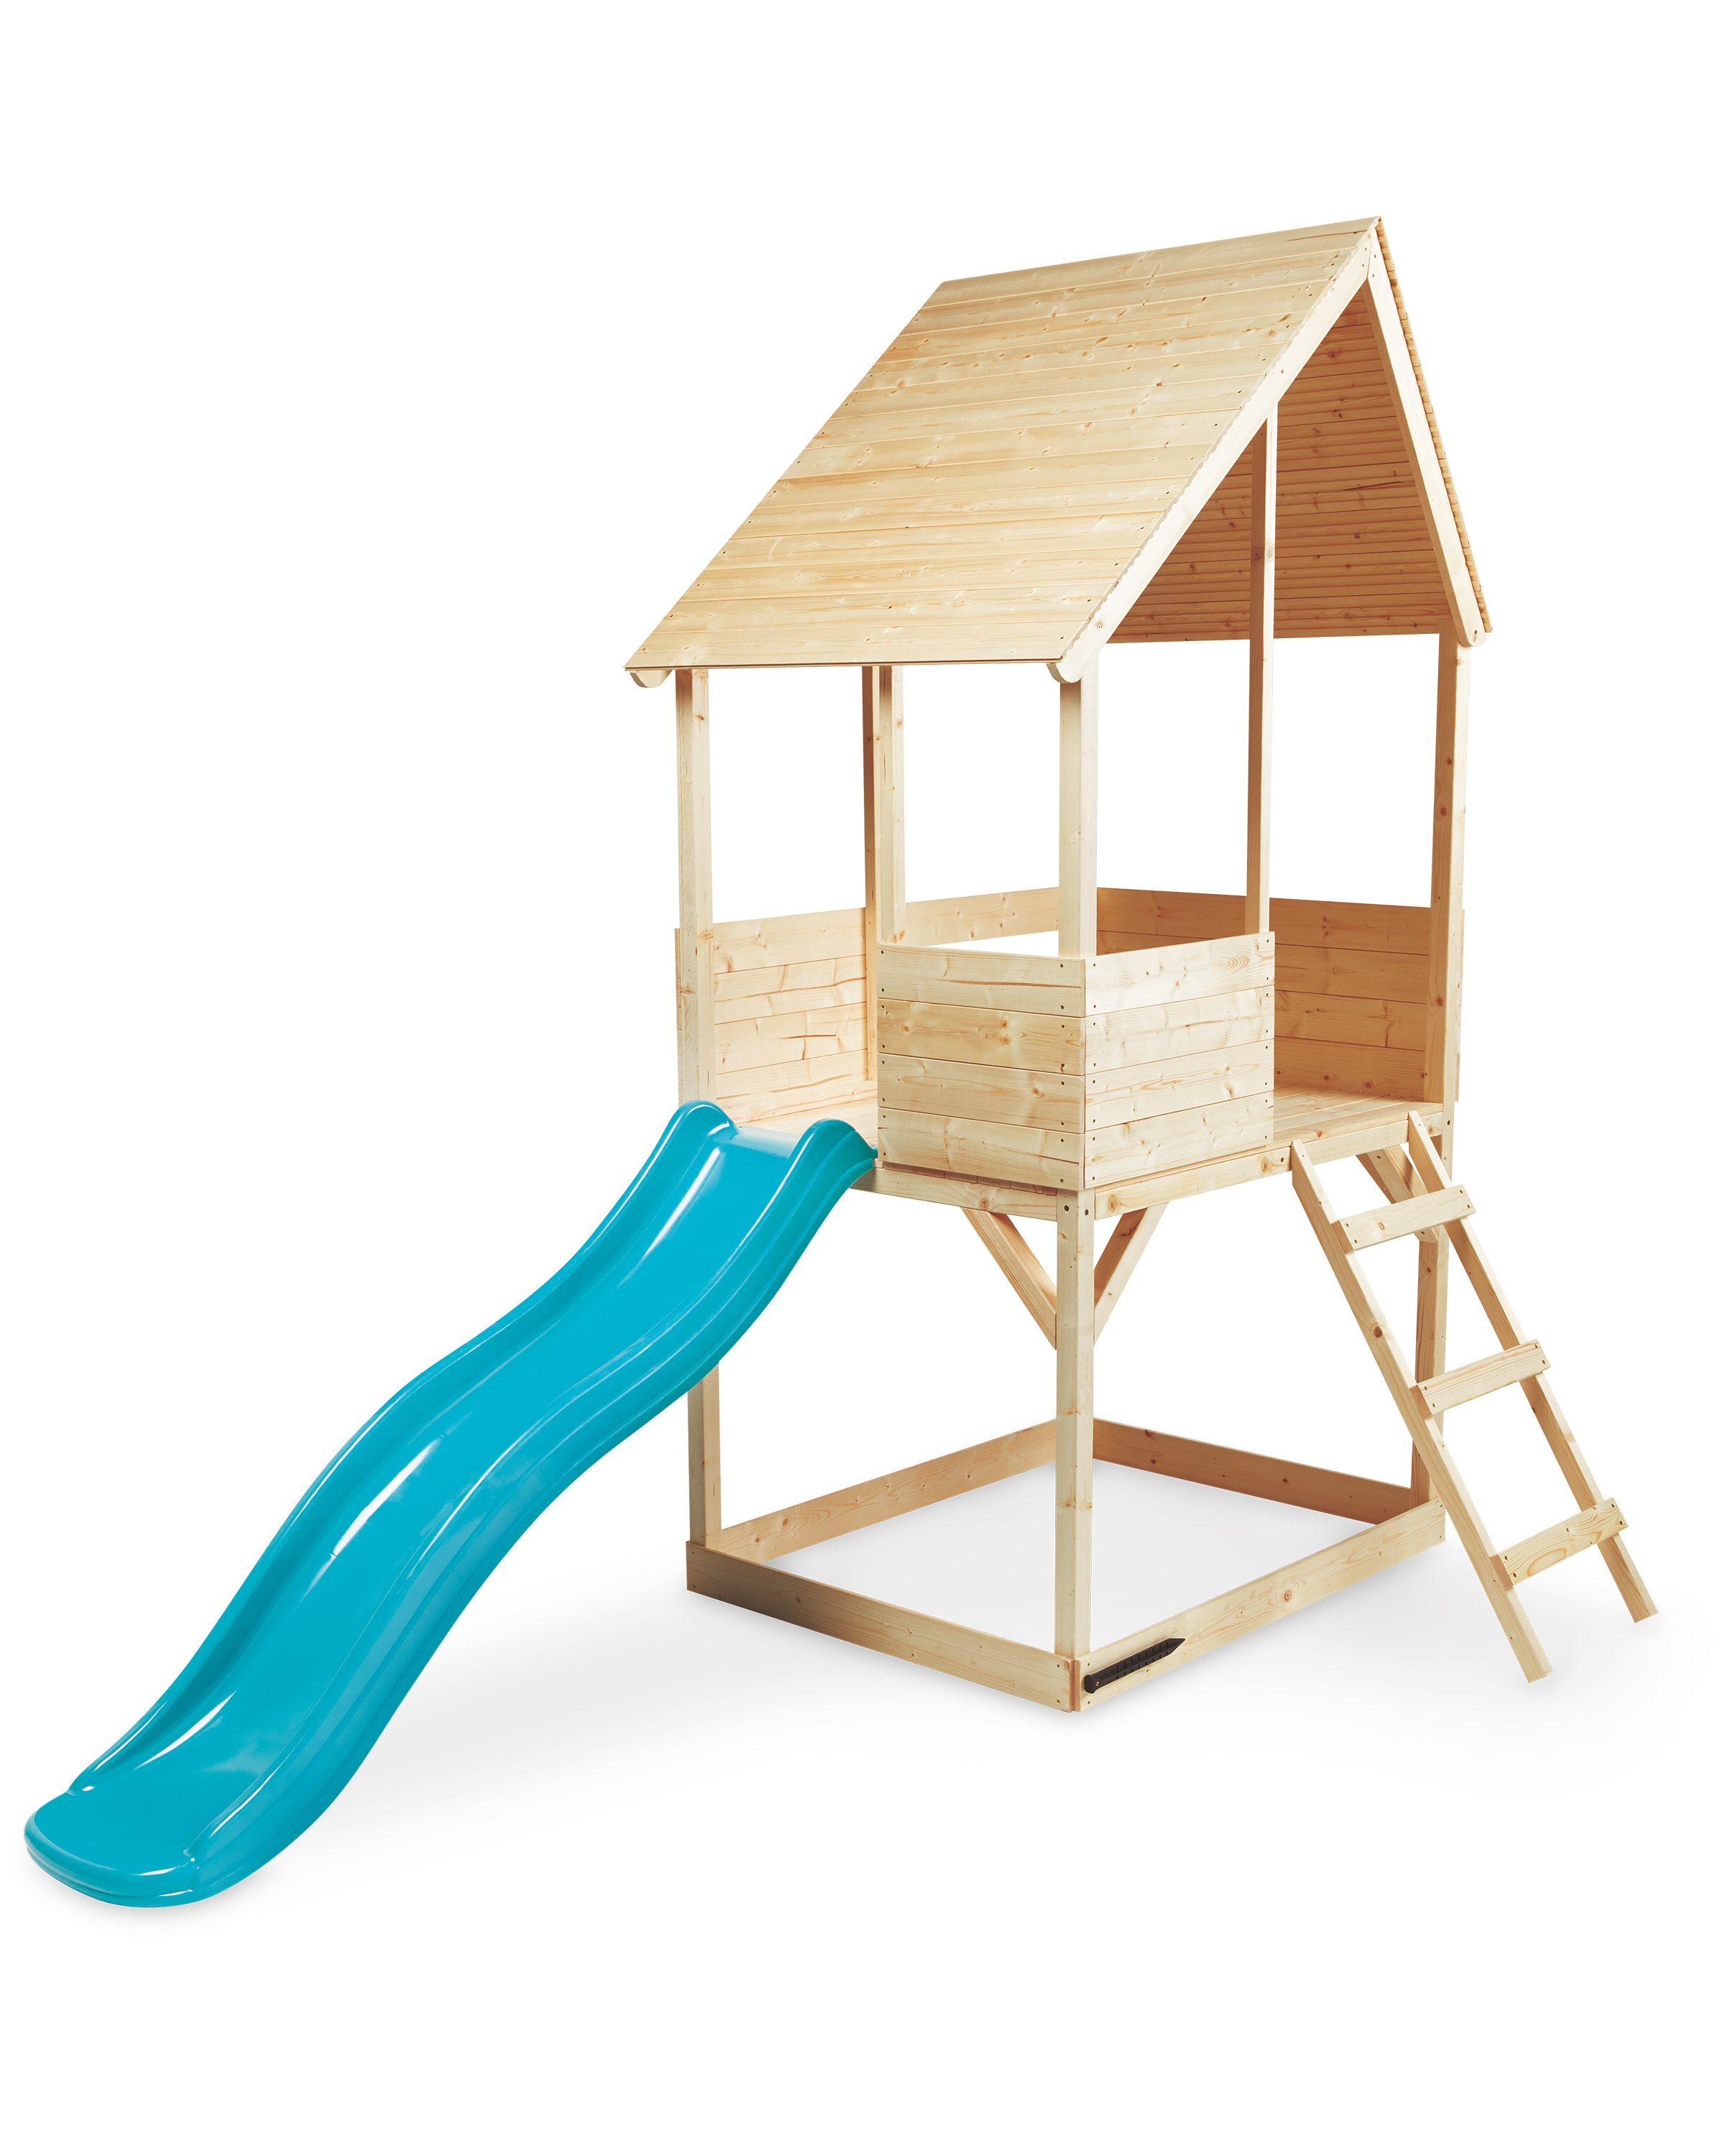 Kids Wooden Playhouse With Slide Aldi Uk, Childrens Outdoor Wooden Playhouse With Slide